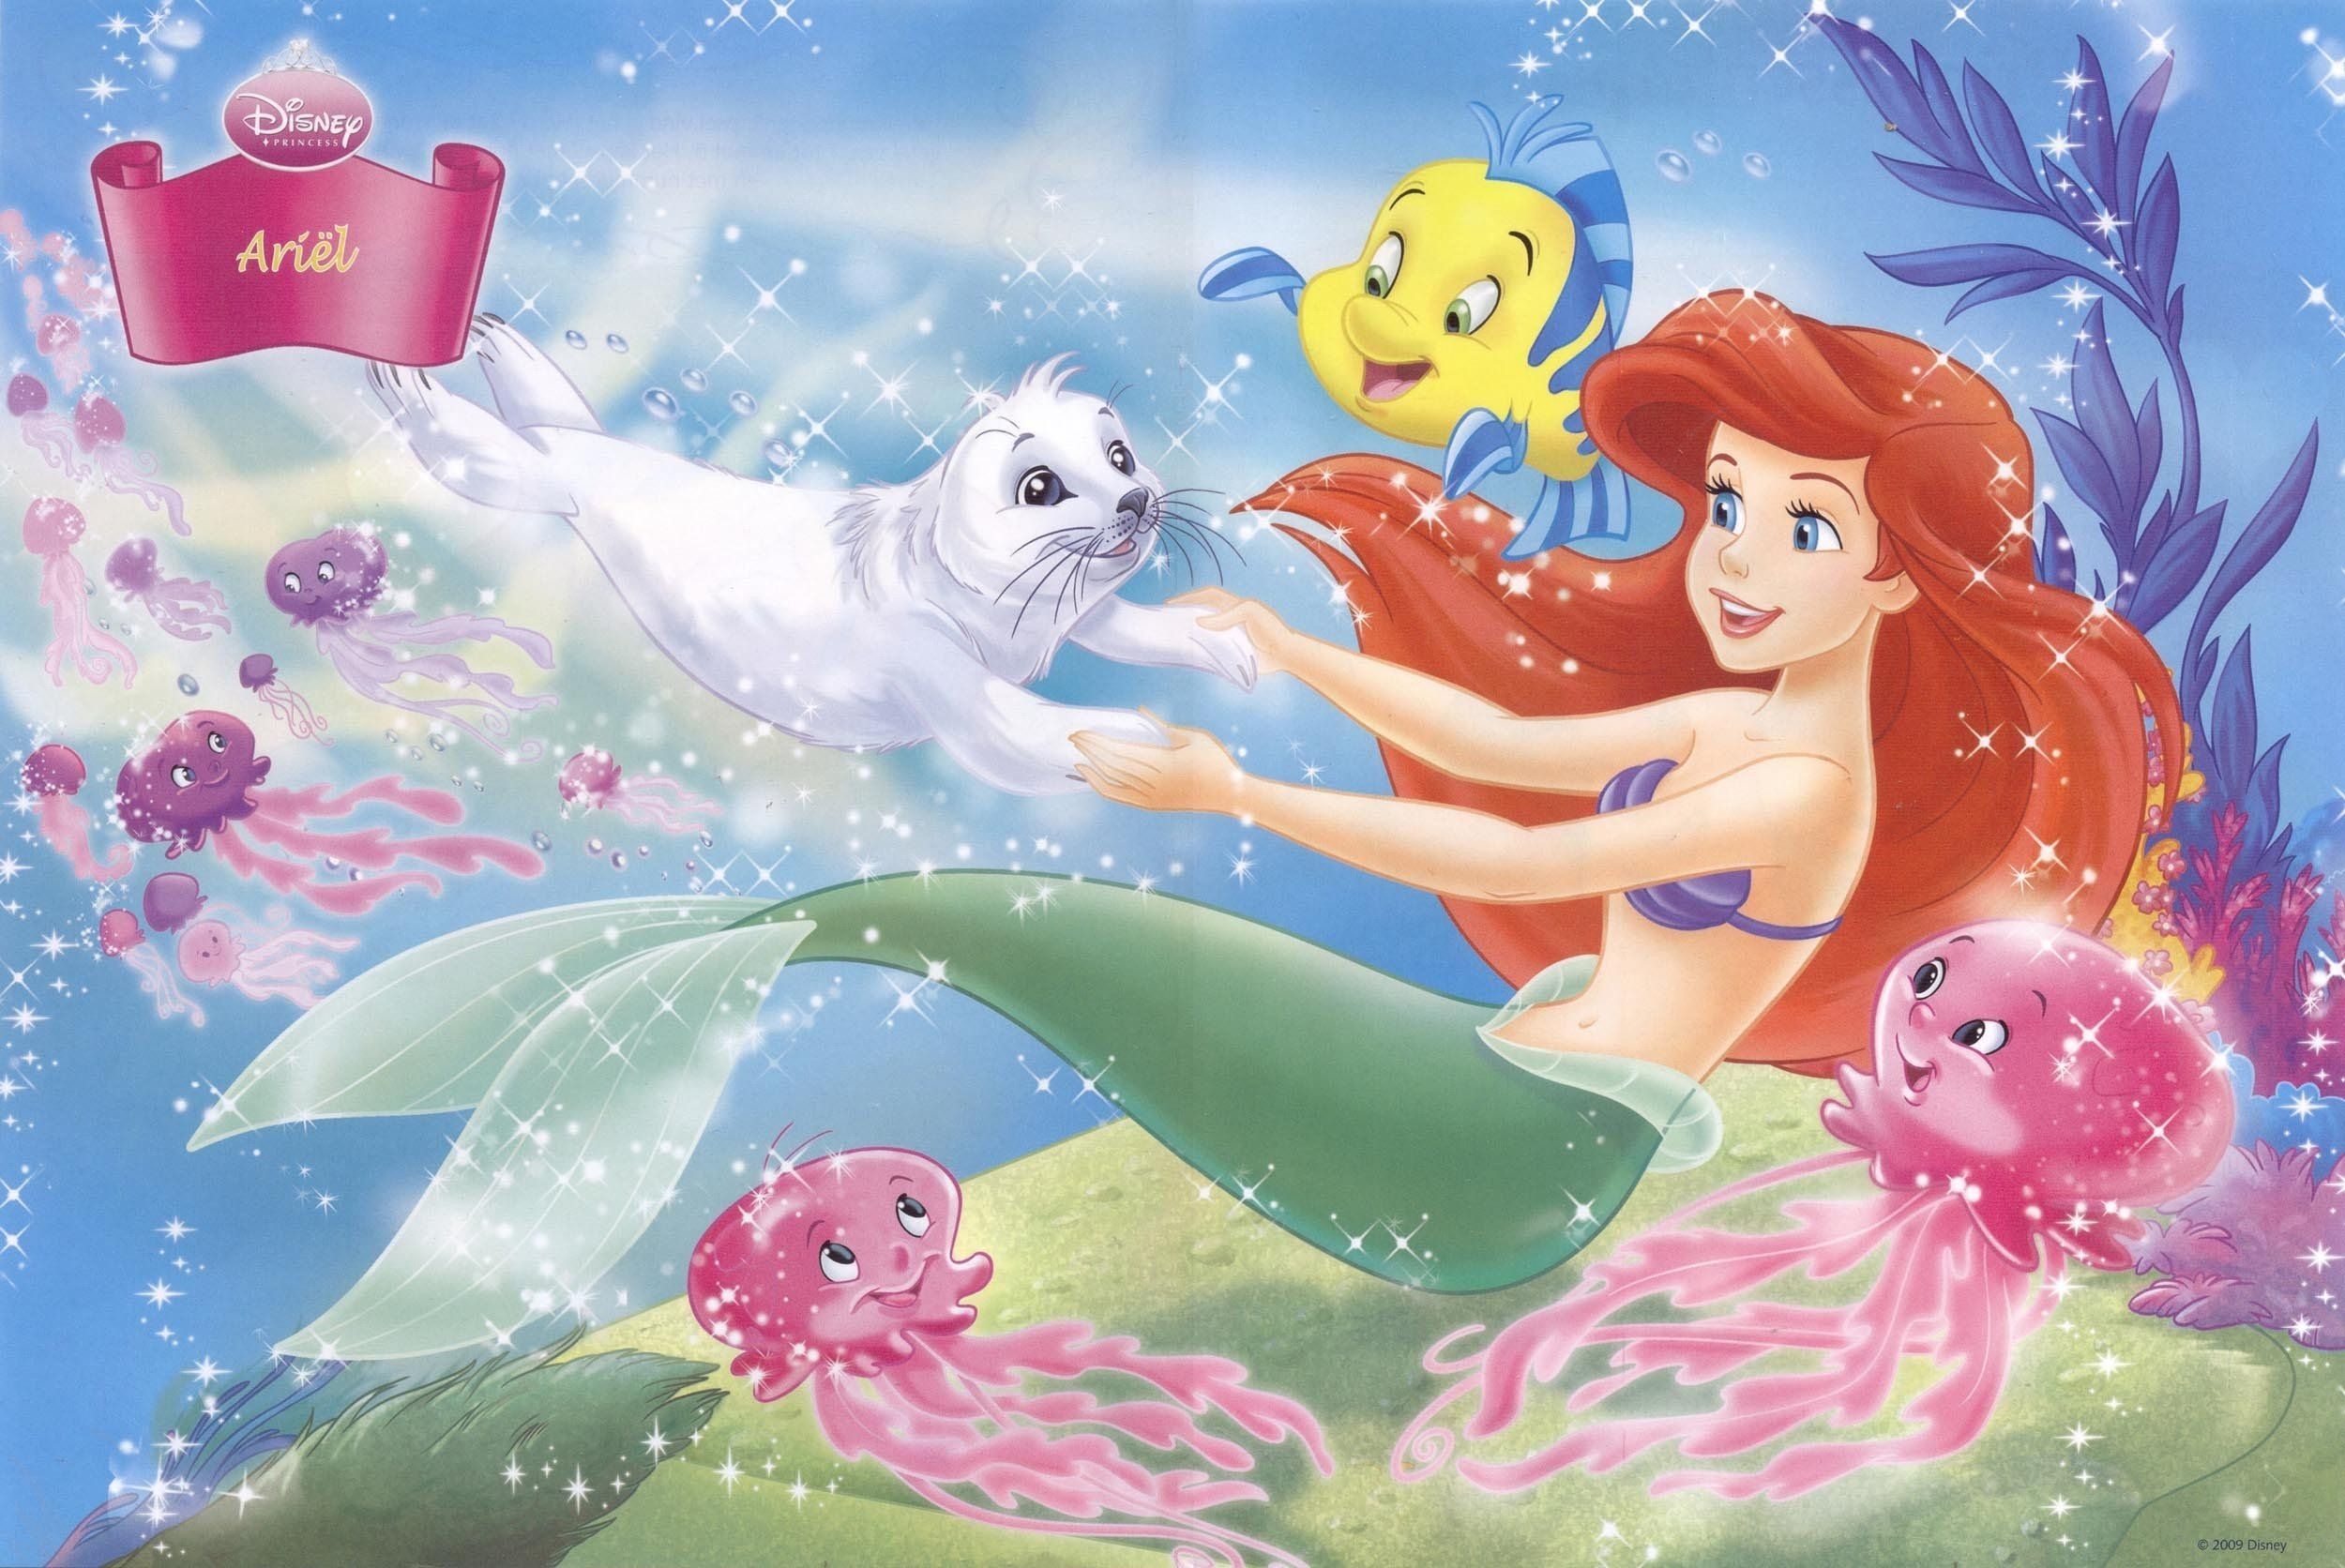 LITTLE MERMAID disney fantasy animation cartoon adventure family 1littlemermaid ariel princess ocean sea underwater wallpaperx1672